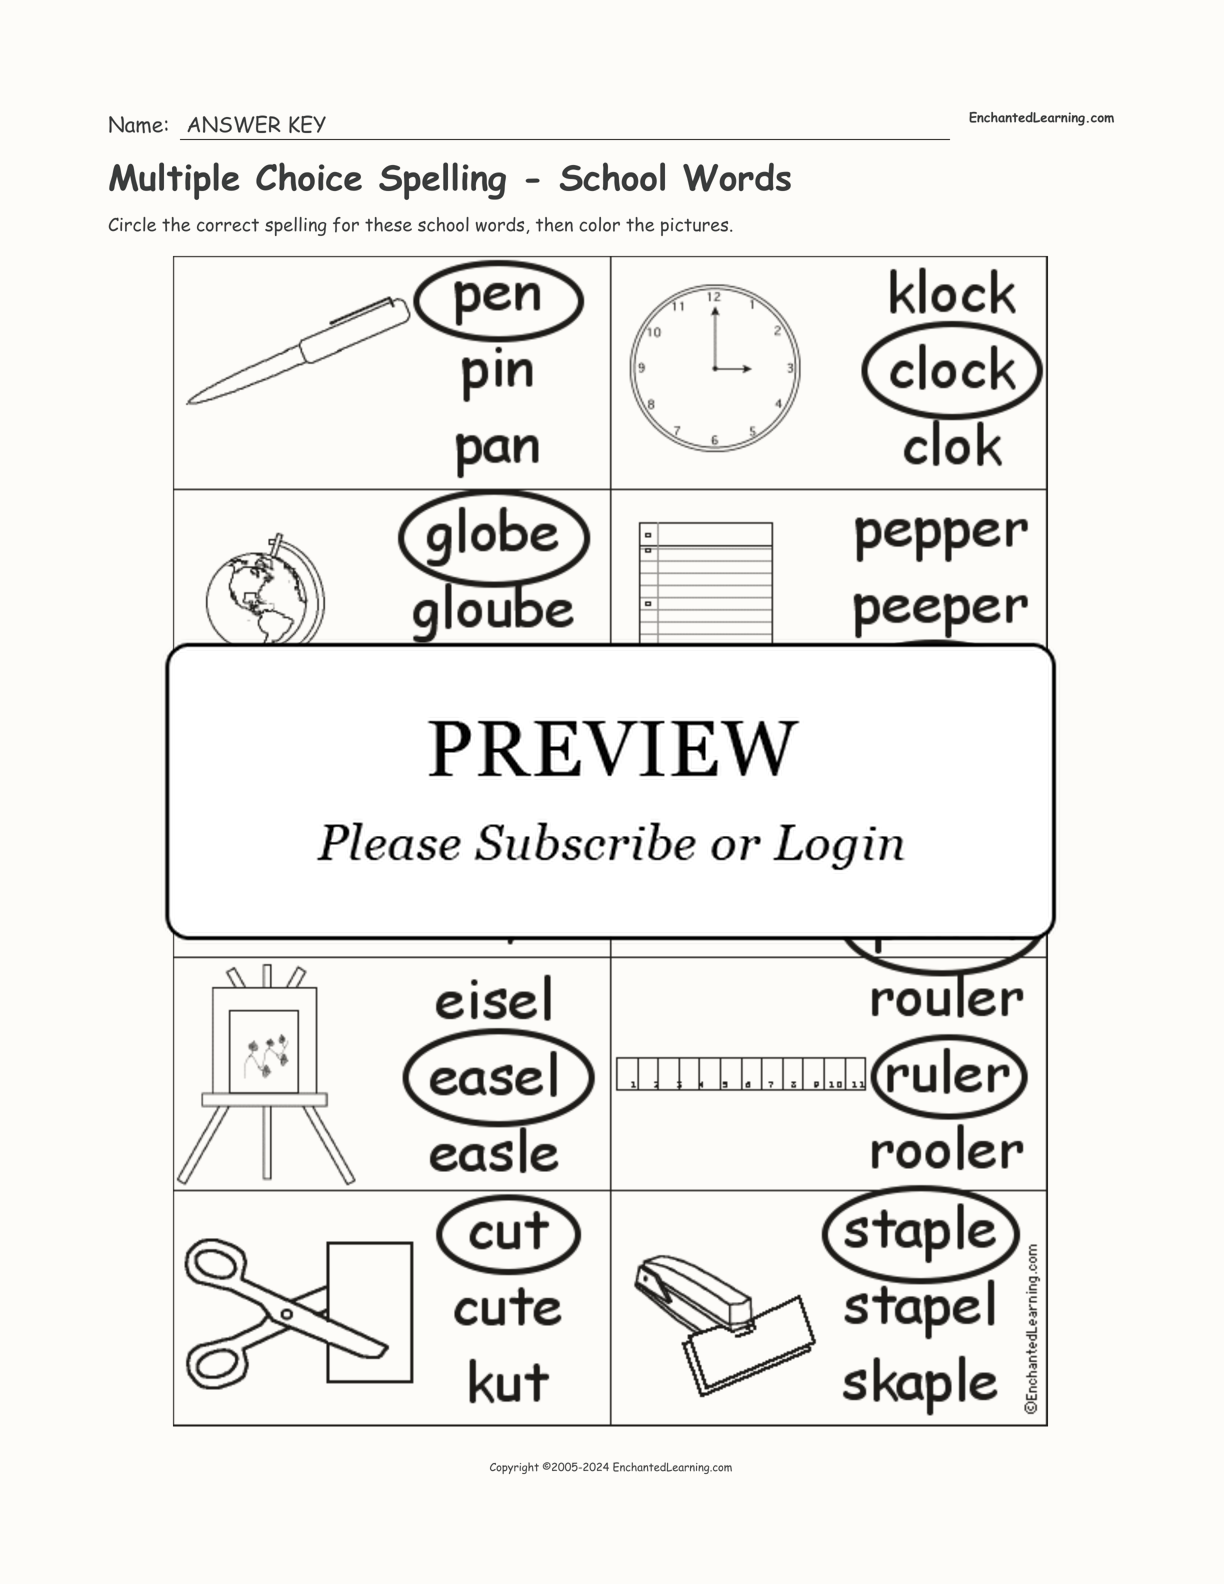 Multiple Choice Spelling -  School Words interactive worksheet page 2